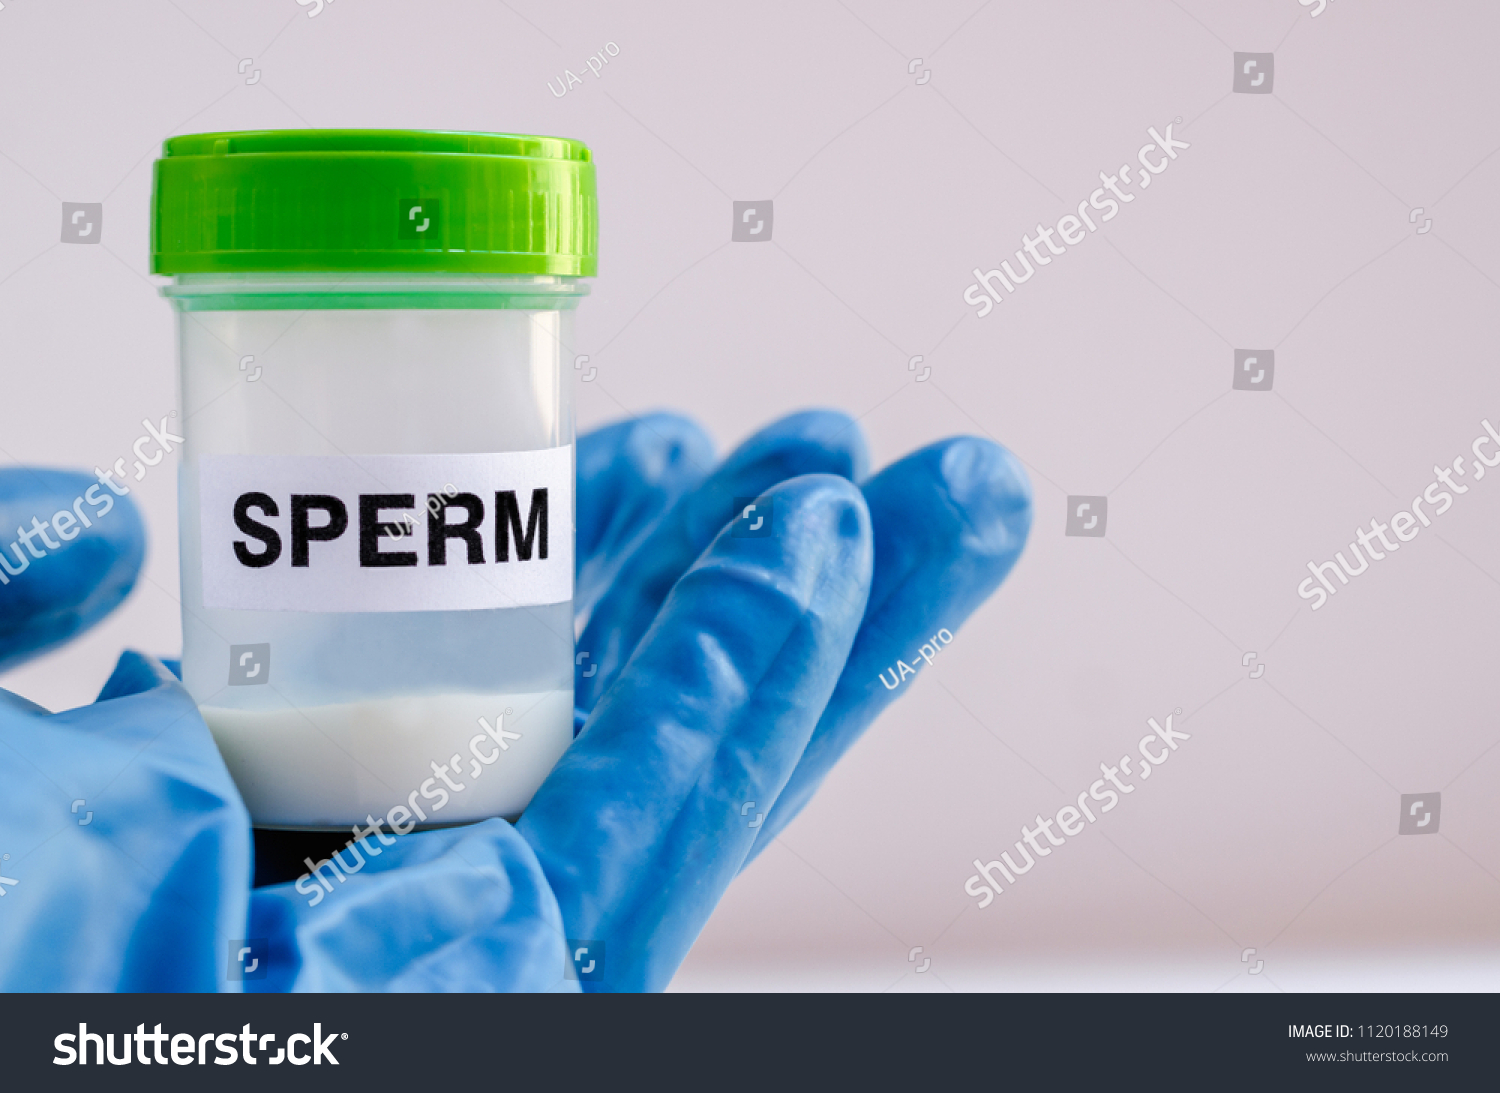 Sperm donor legal